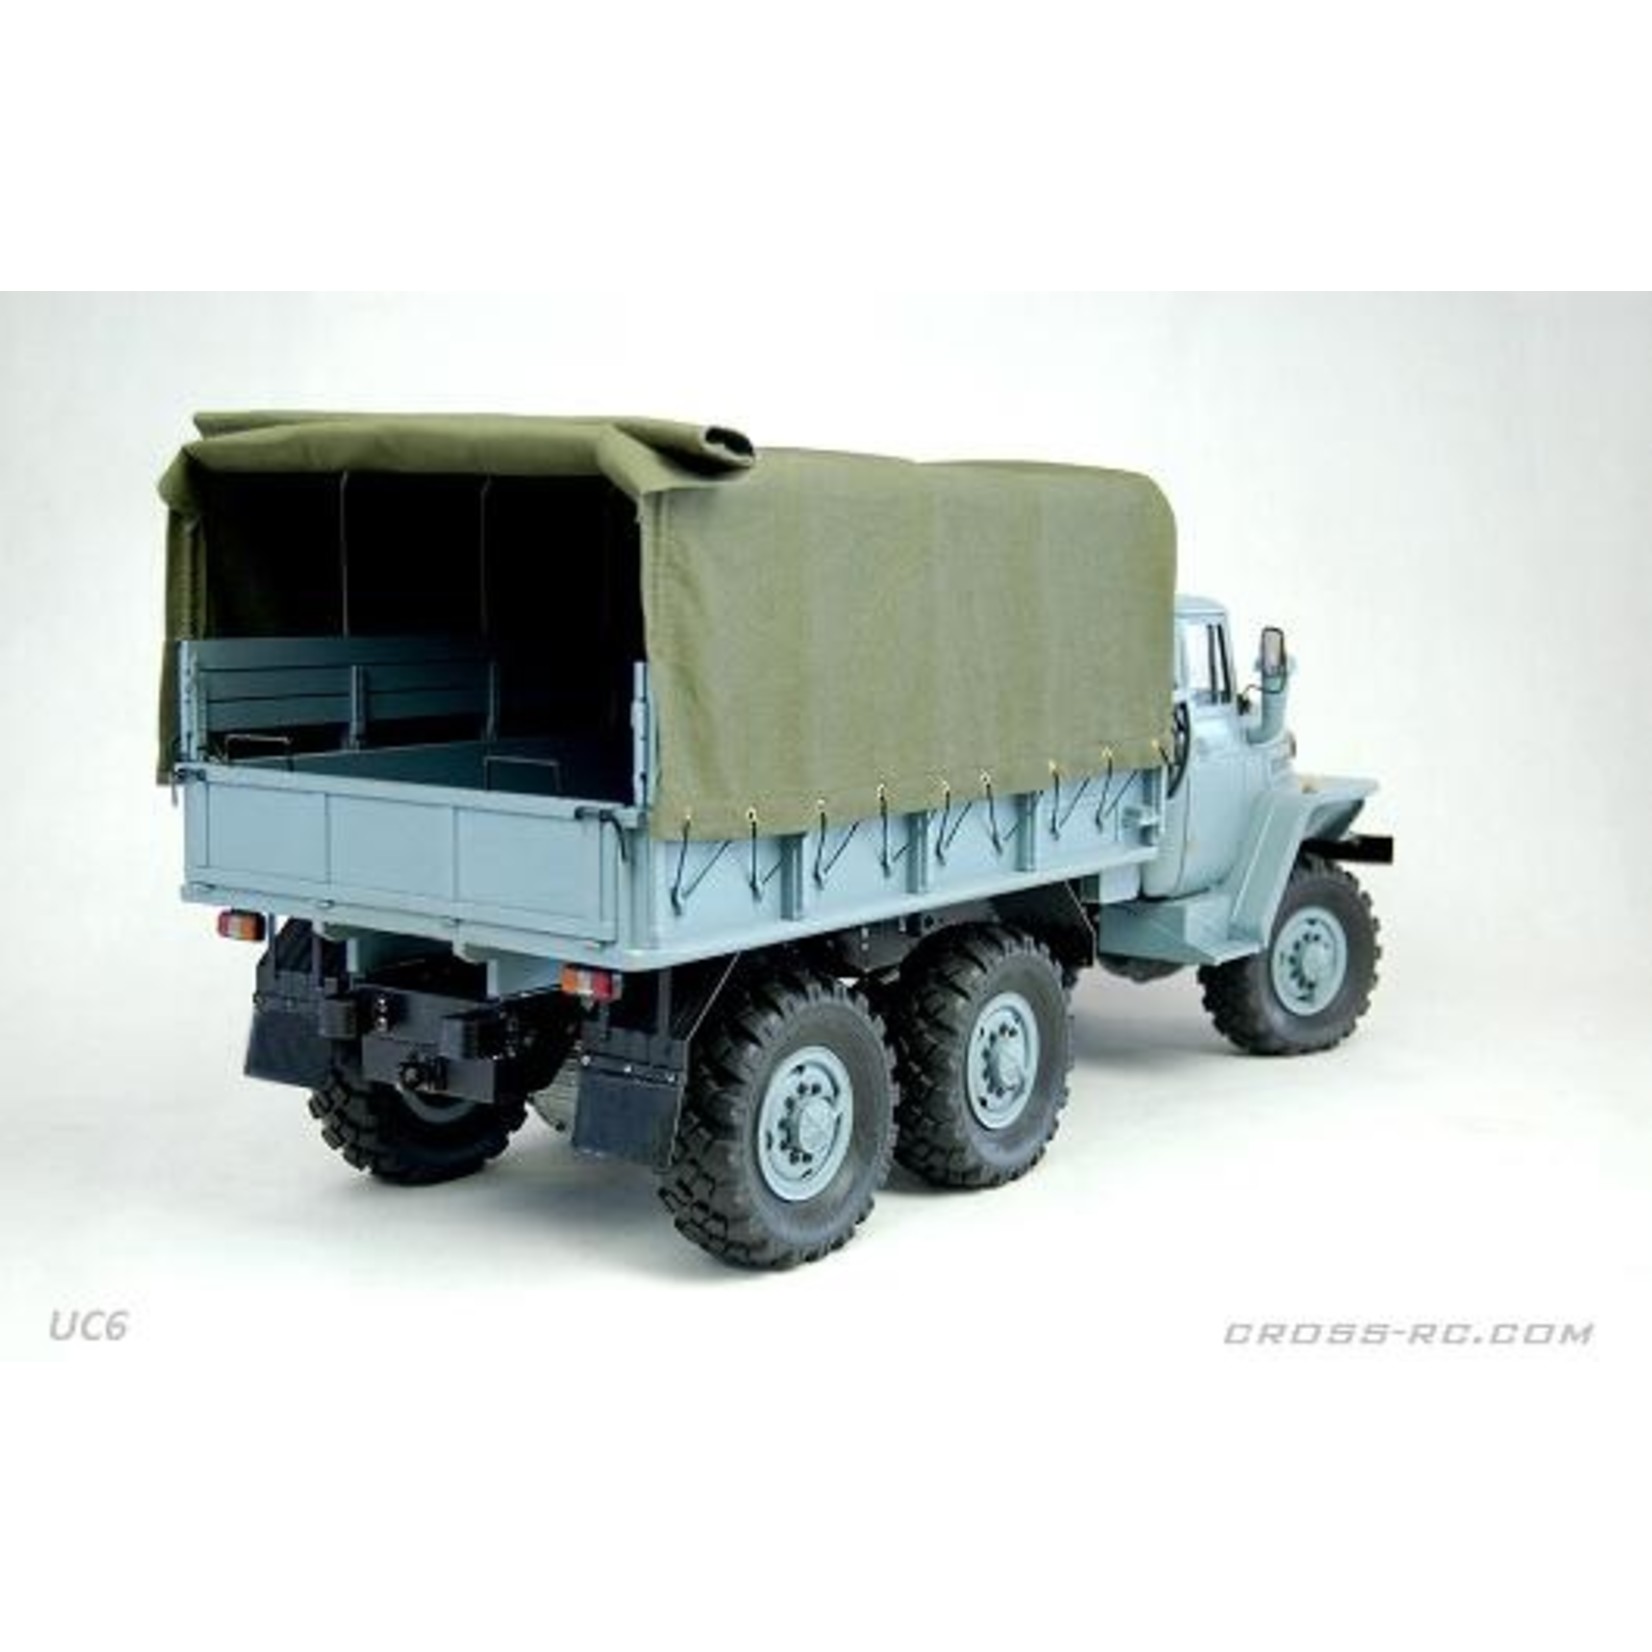 Cross RC UC6 1/12 6x4 Scale Truck Crawler Kit